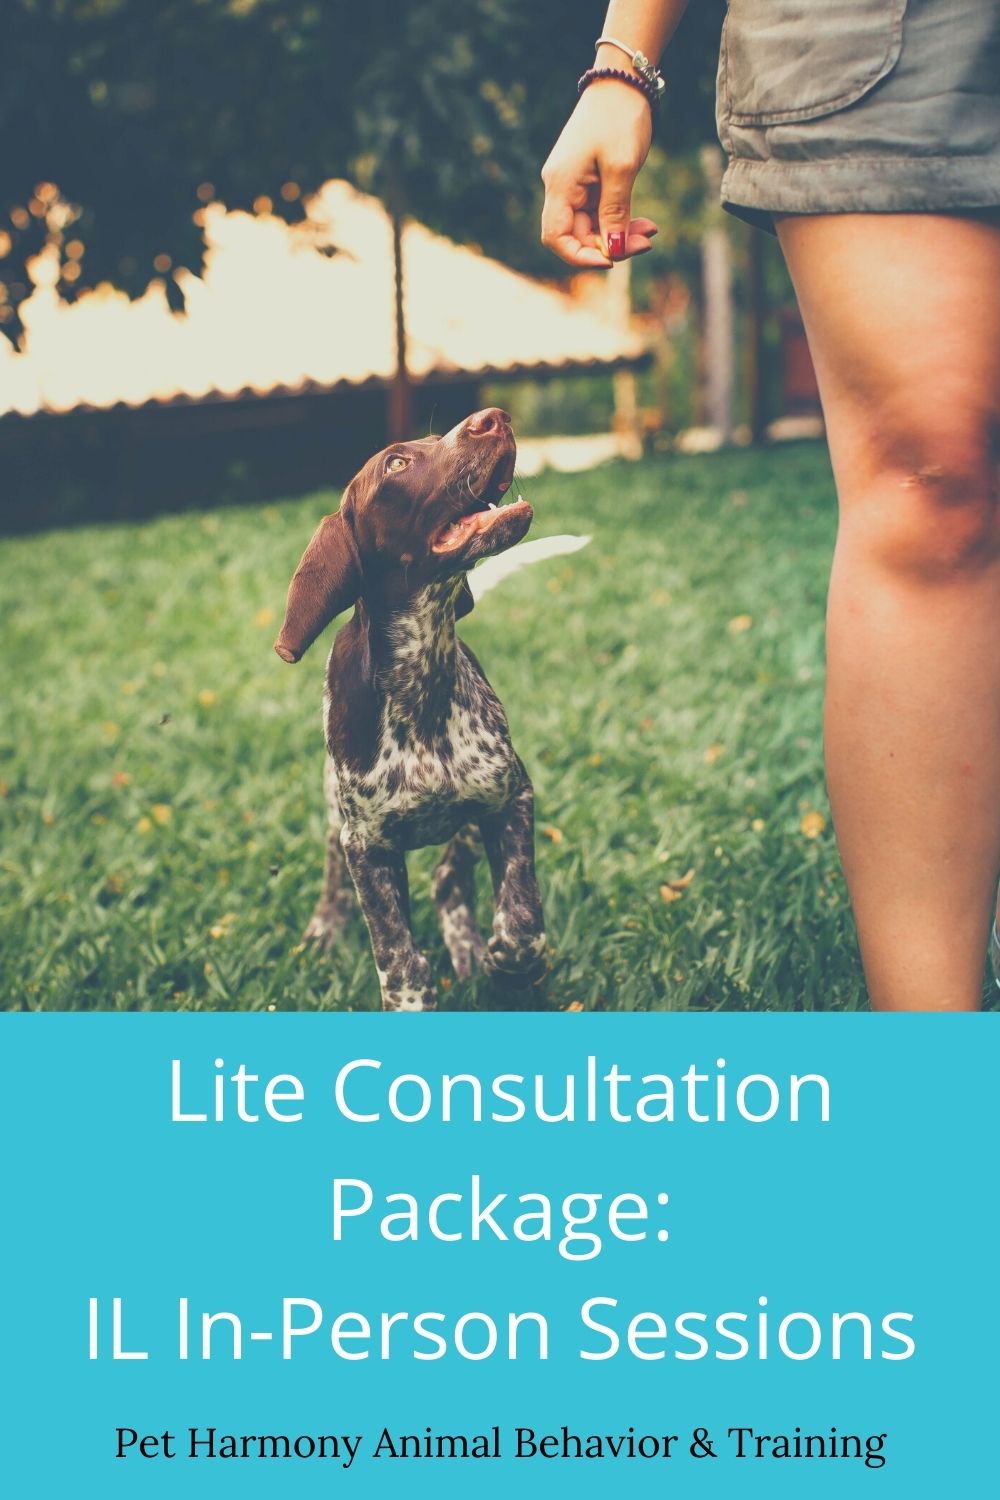 Lite consultation package IL in-person